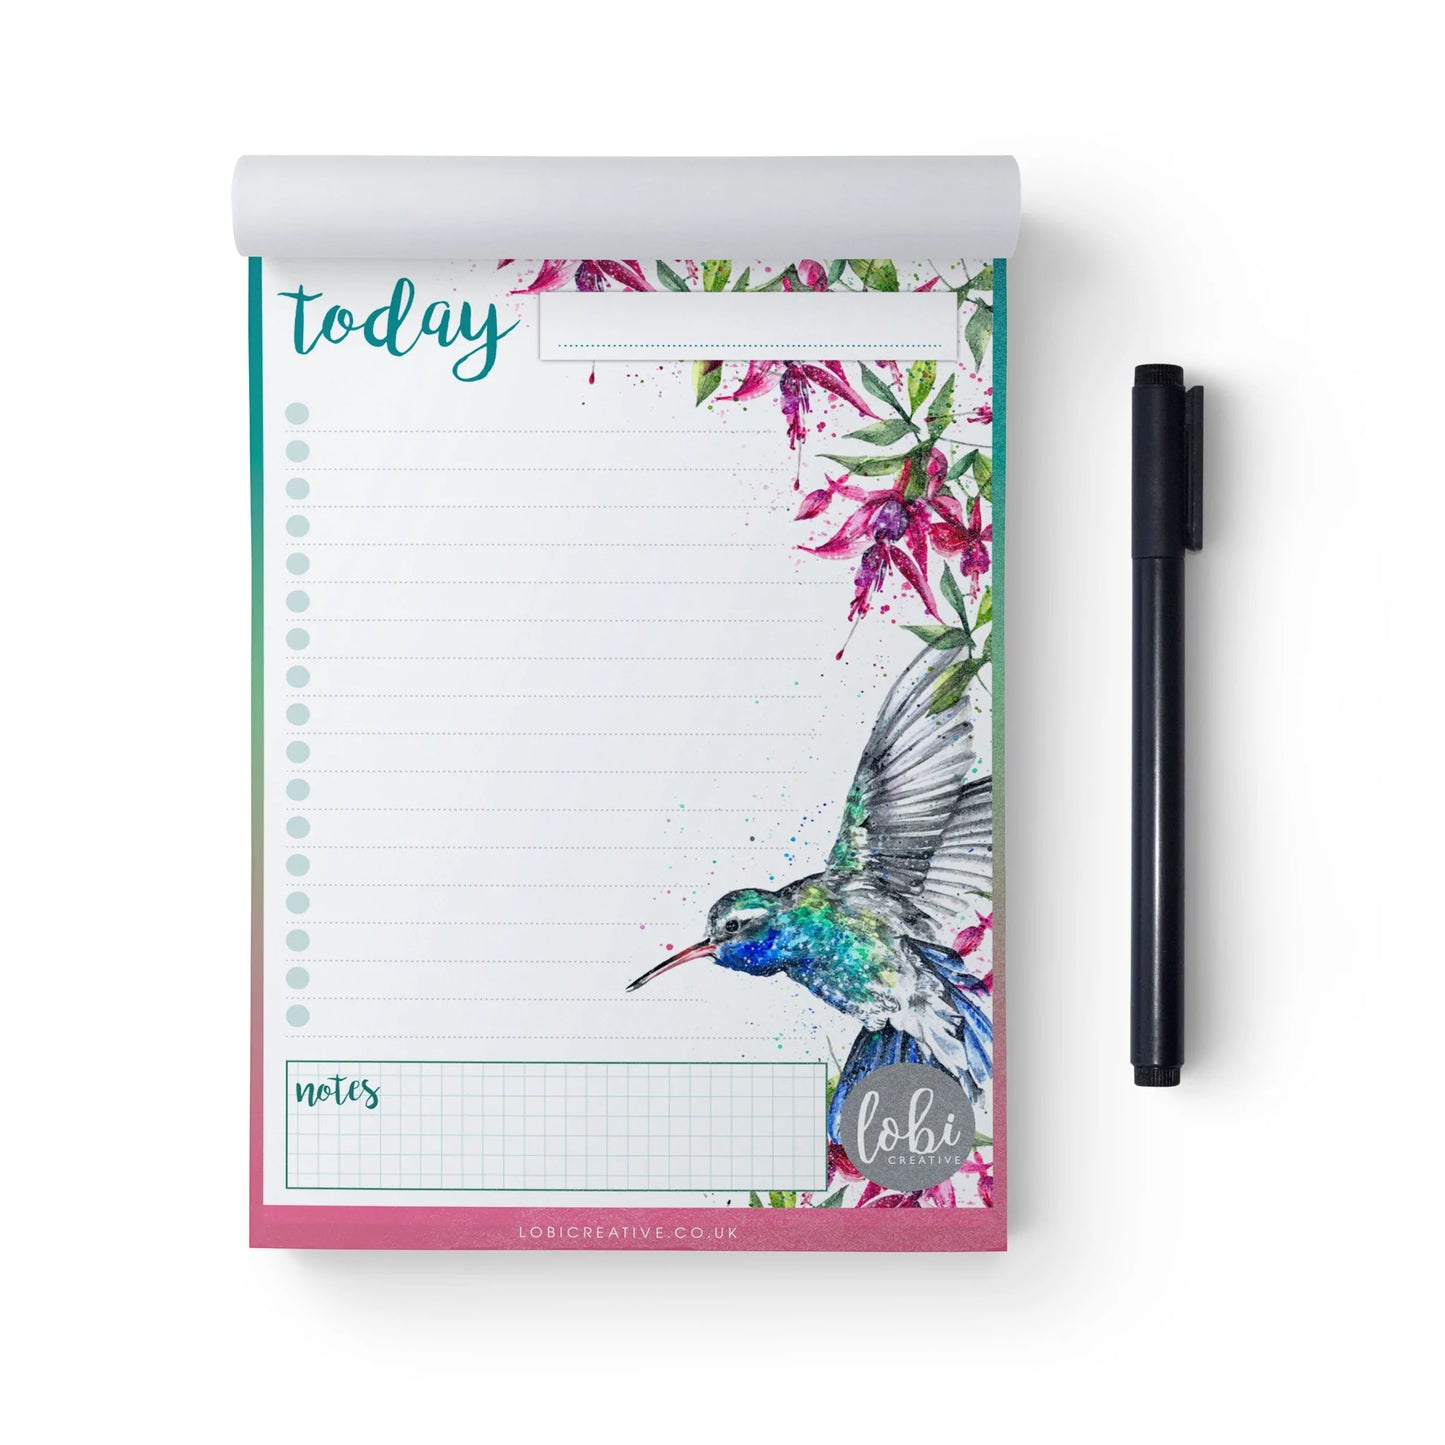 Bright & Cheerful hummingbird design on a daily listnotepad